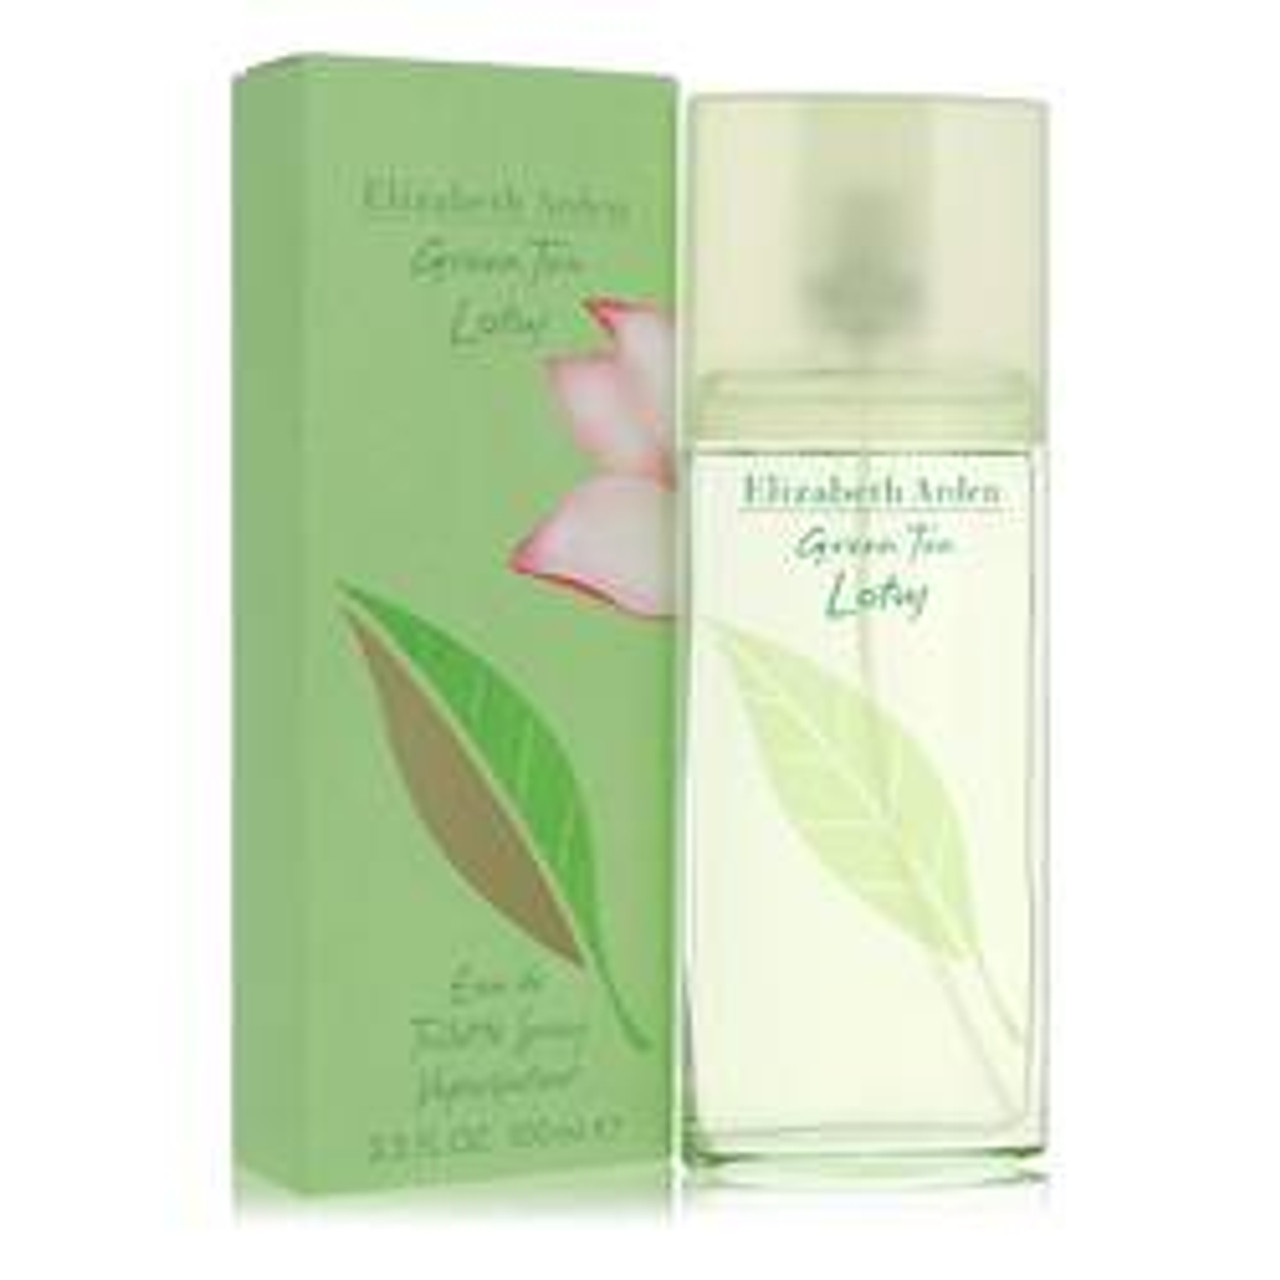 Green Tea Lotus Perfume By Elizabeth Arden Eau De Toilette Spray 3.3 oz for Women - [From 39.00 - Choose pk Qty ] - *Ships from Miami